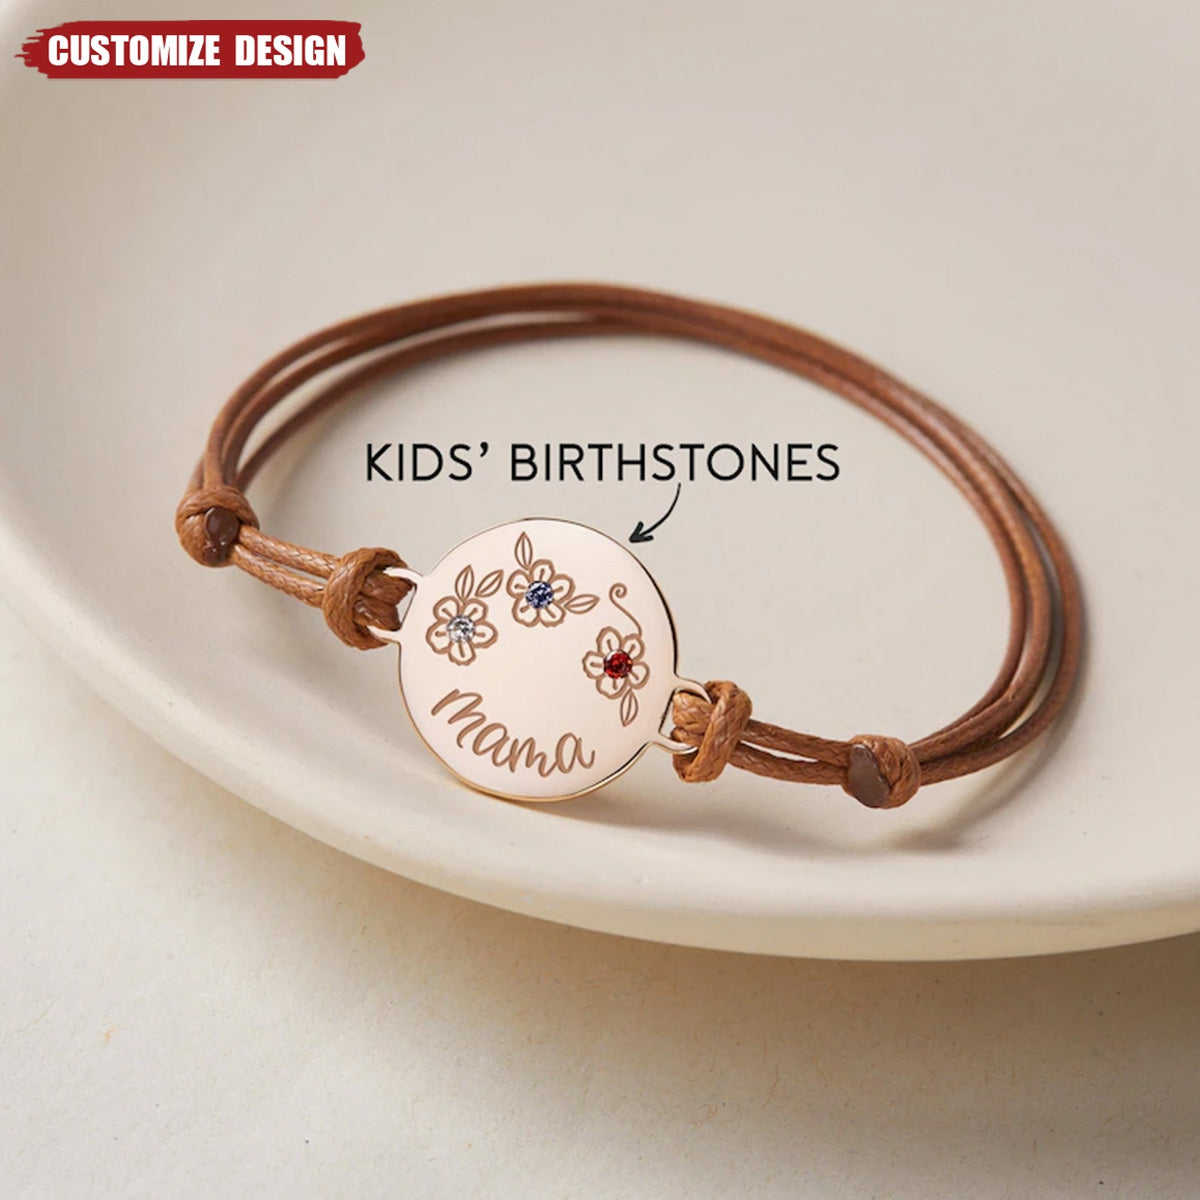 Personalized Mom Grandma Birthstone Bracelet With Kid‘s Birthstones